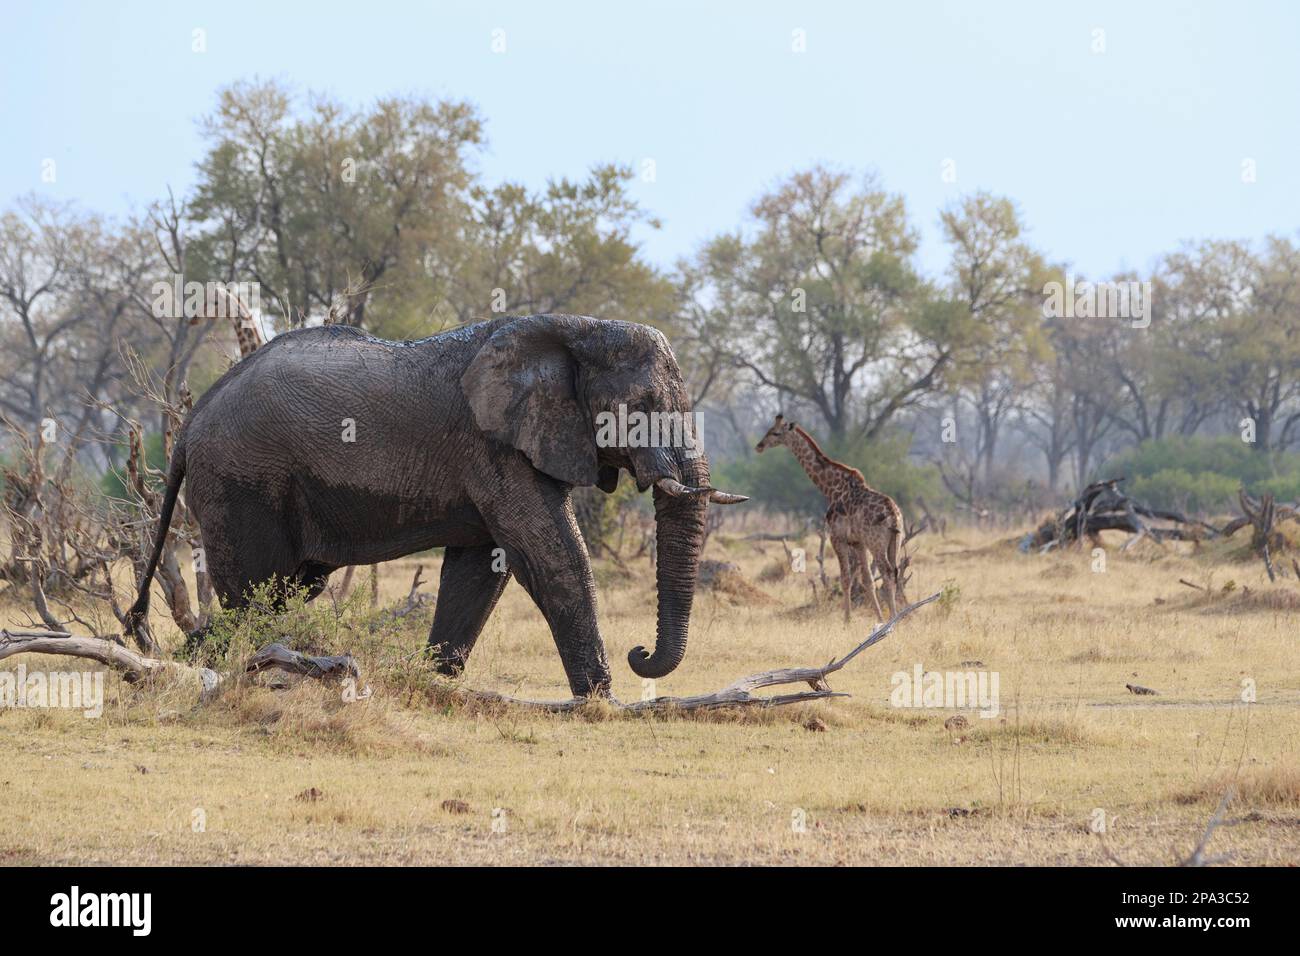 Elephant, Loxodonta africana, crosses from left to right. Behind wild animal is African bushland. Okavango Delta, Botswana, Africa Stock Photo